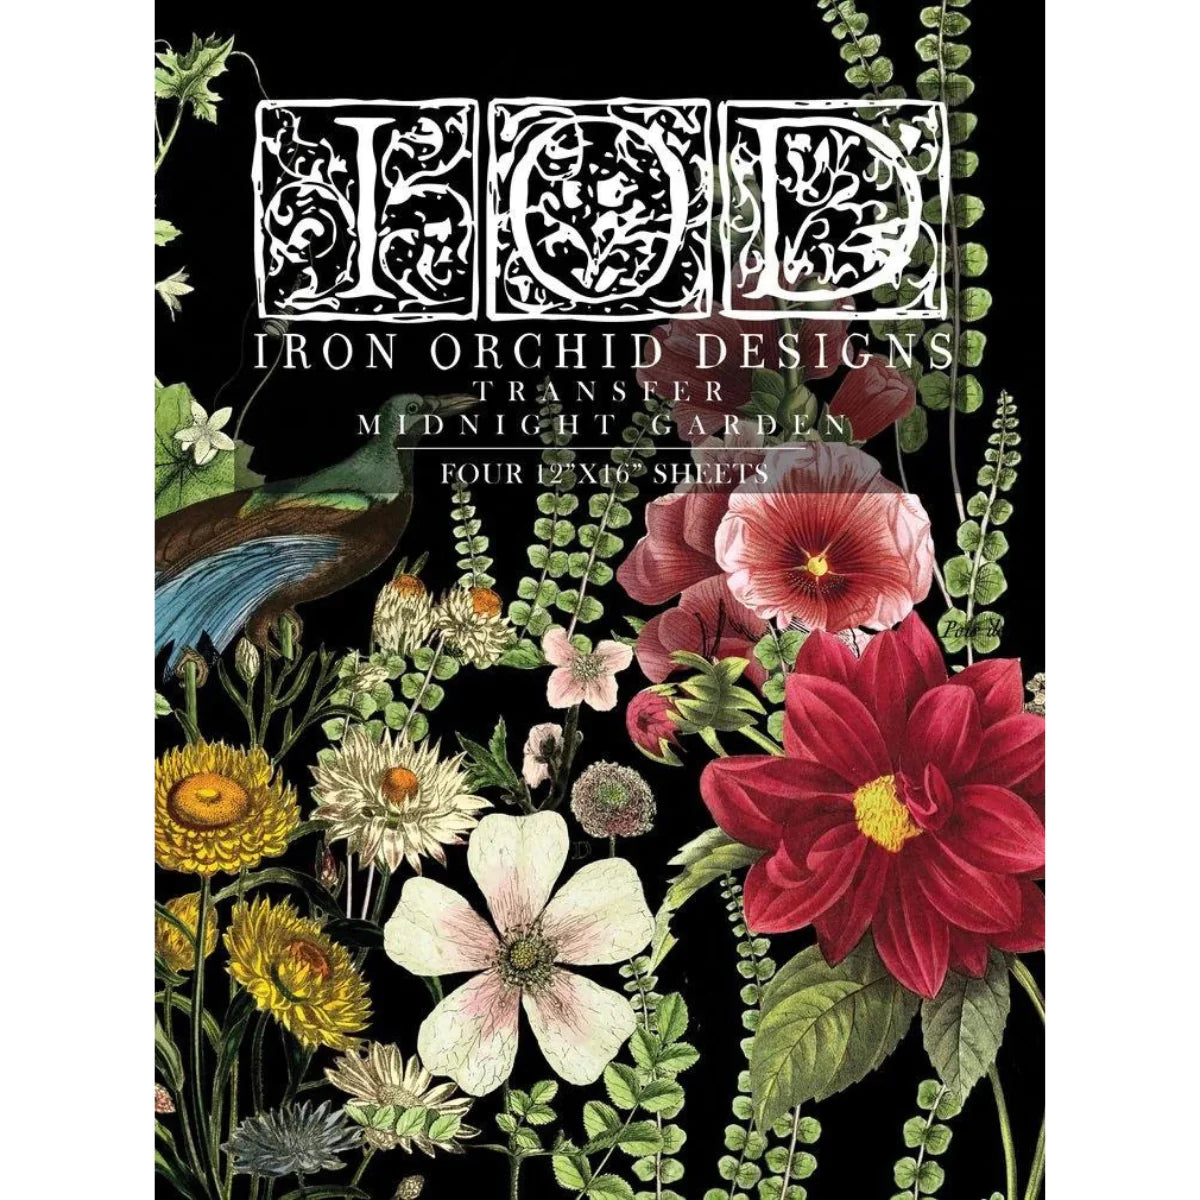 Iron Orchid Designs Transfers Midnight Garden